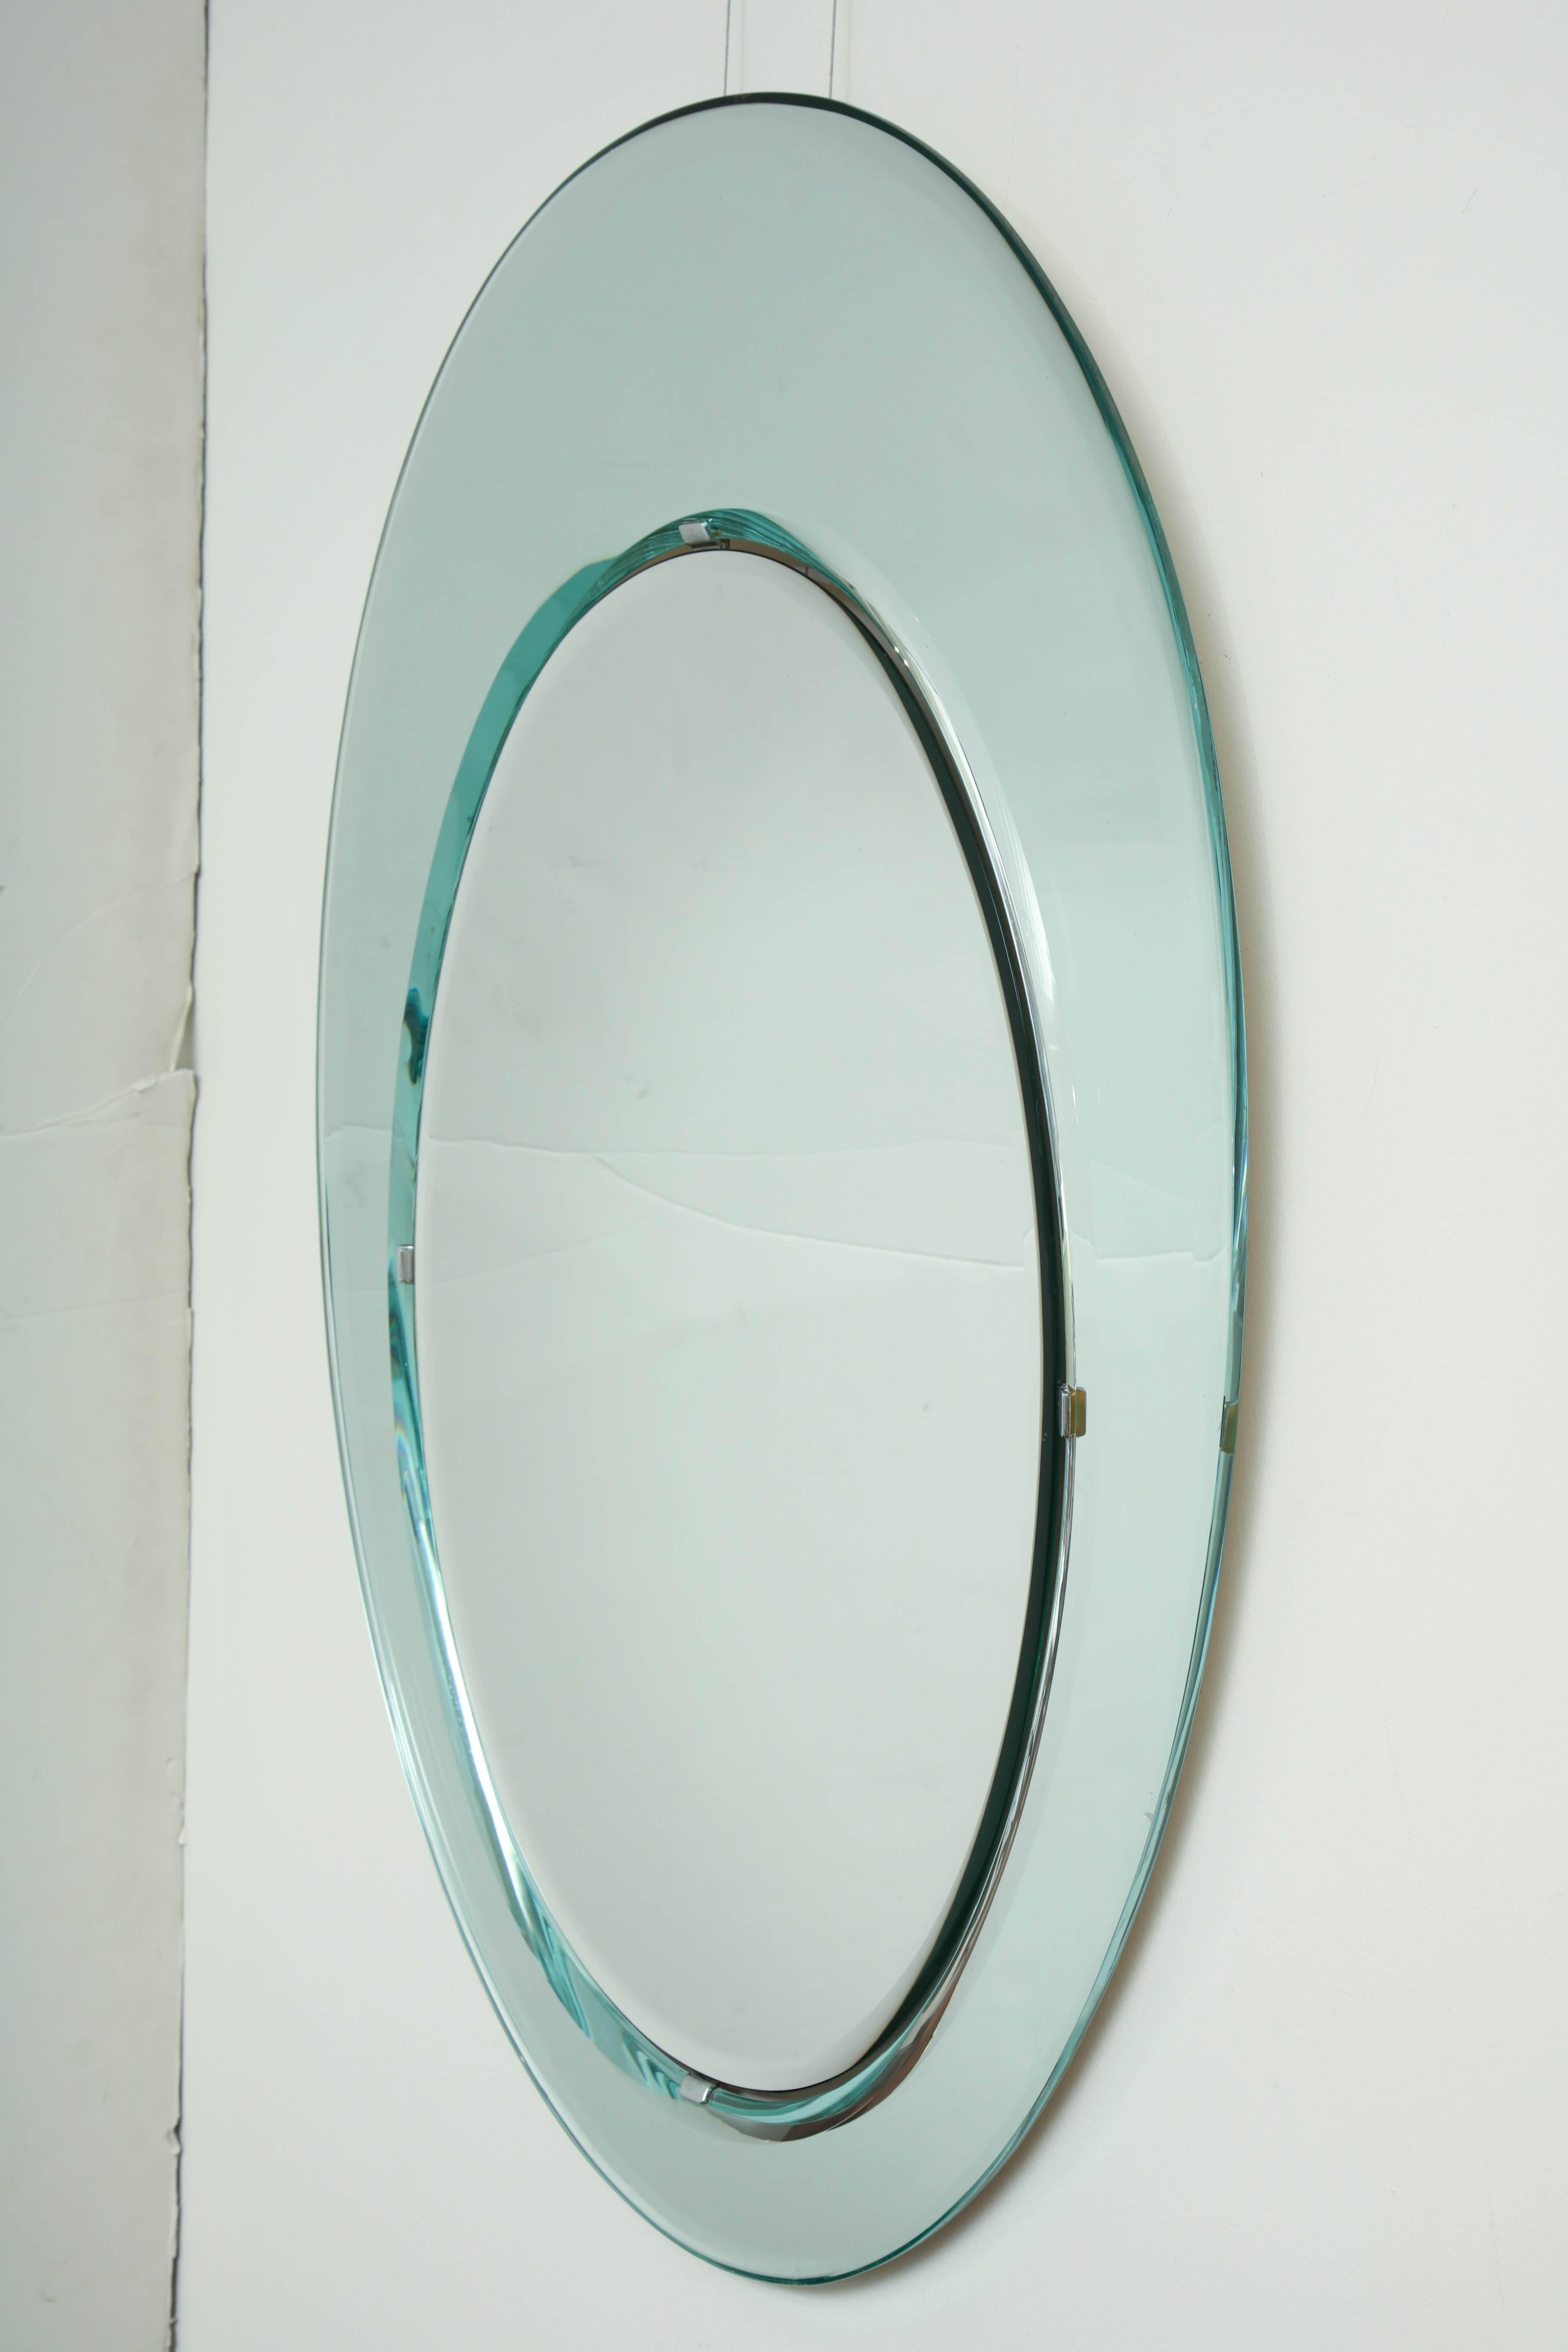 Italian Midcentury Bevelled Oval Wall Mirror by Fontana Arte, Italy